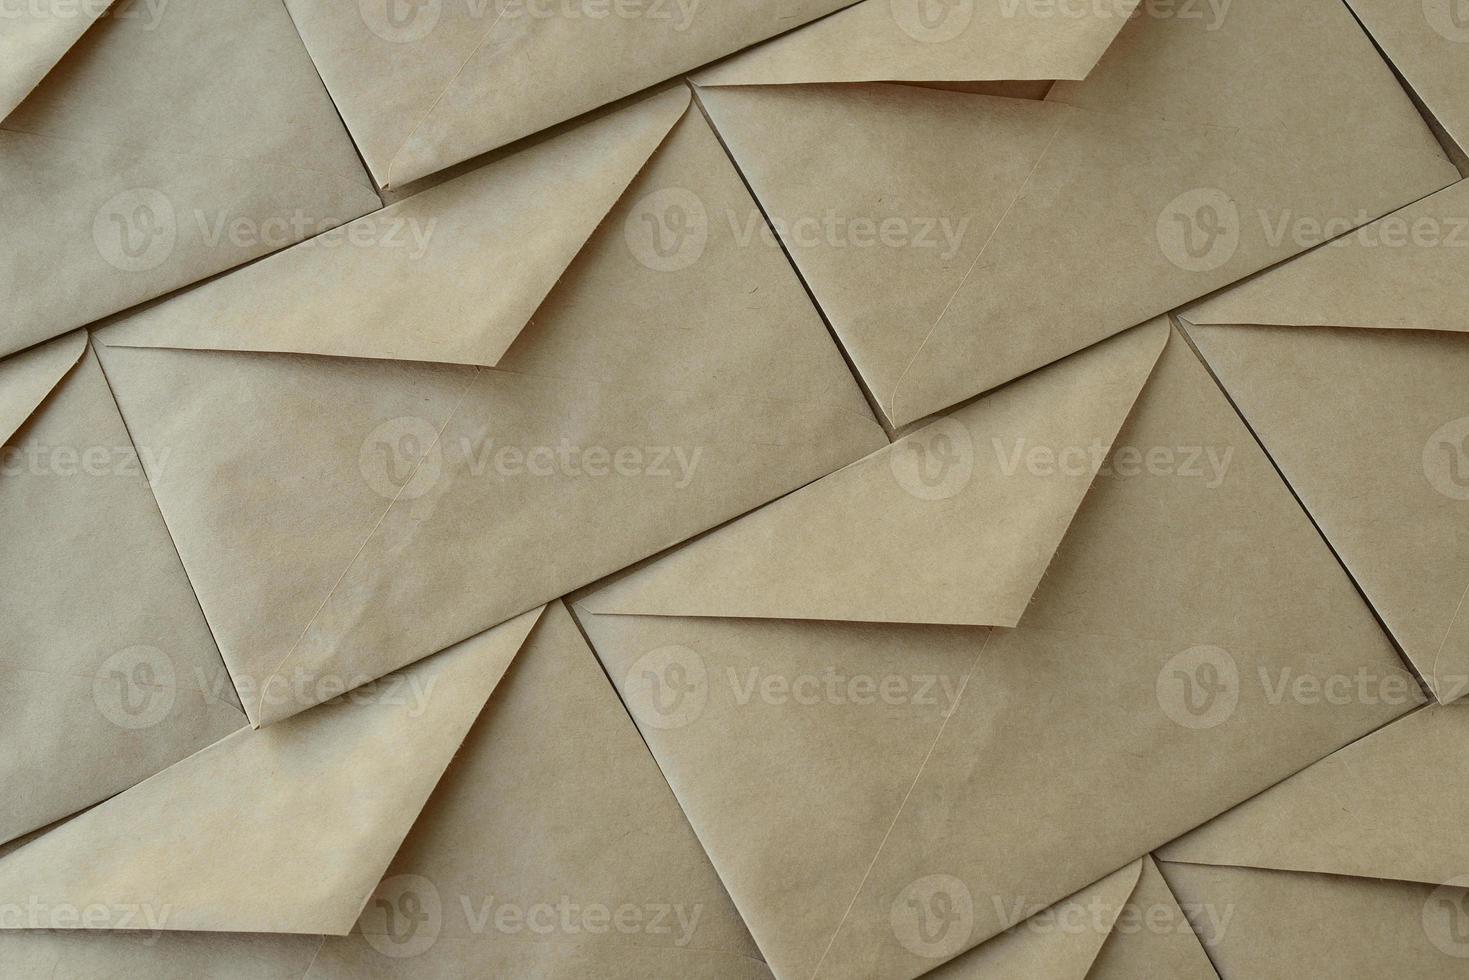 envelopes de papel kraft marrom foto